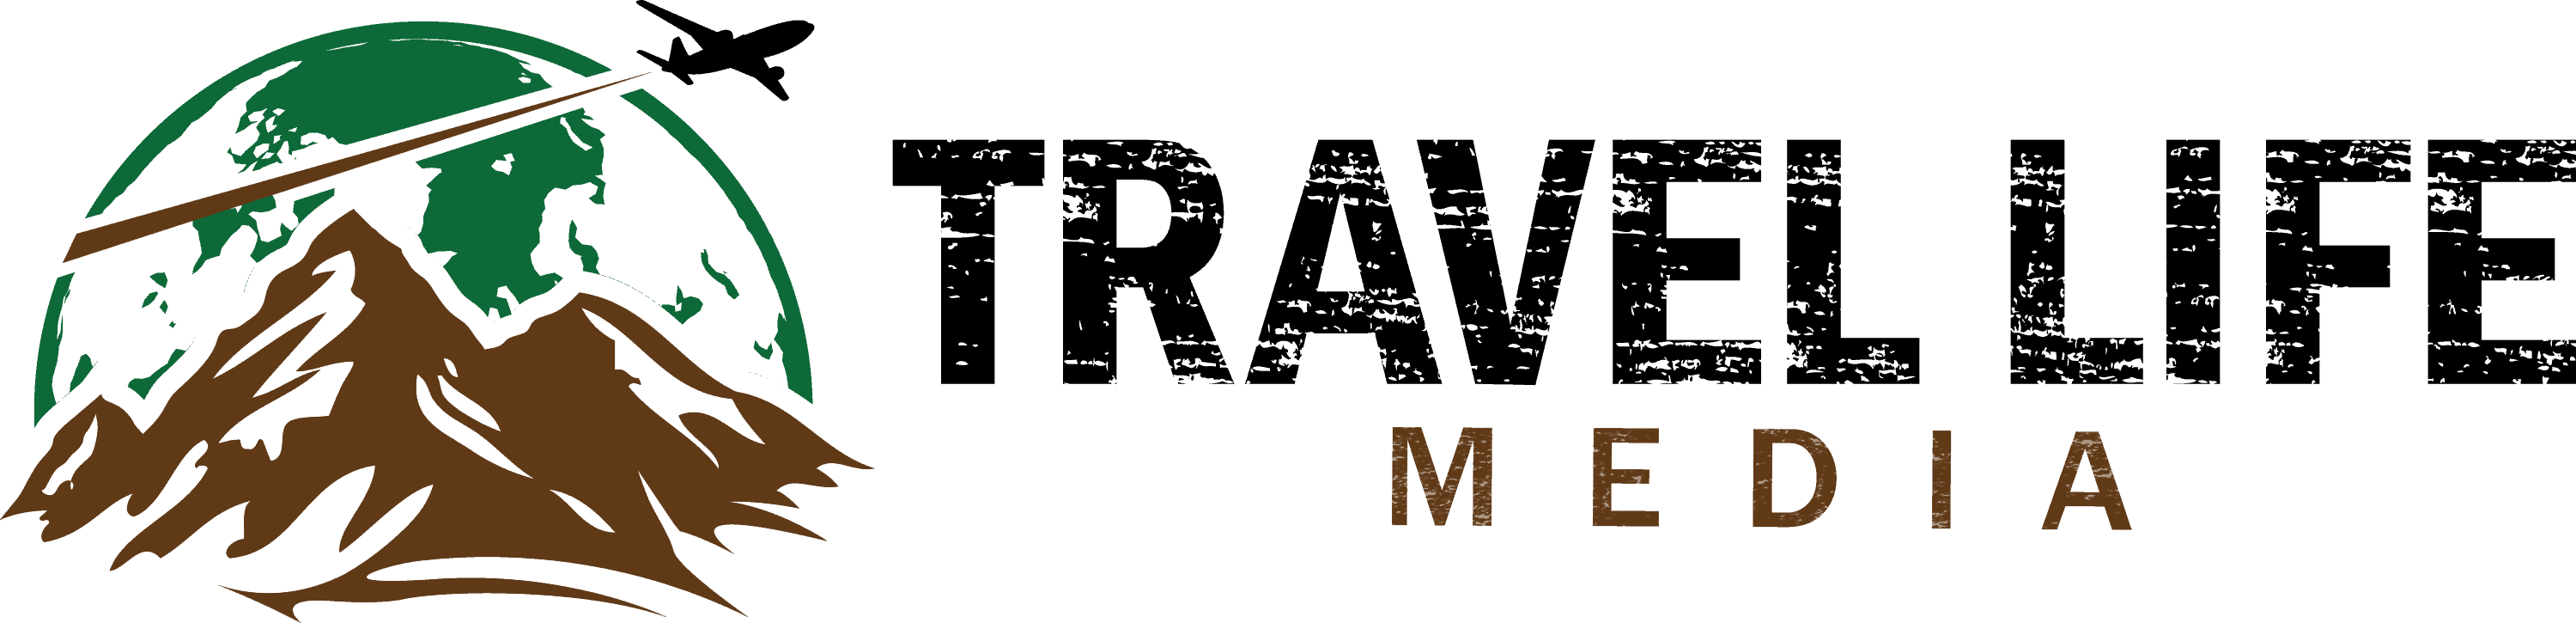 MSN Travel Logo - MSN Life Media: Travel and Tourism Marketing That Works